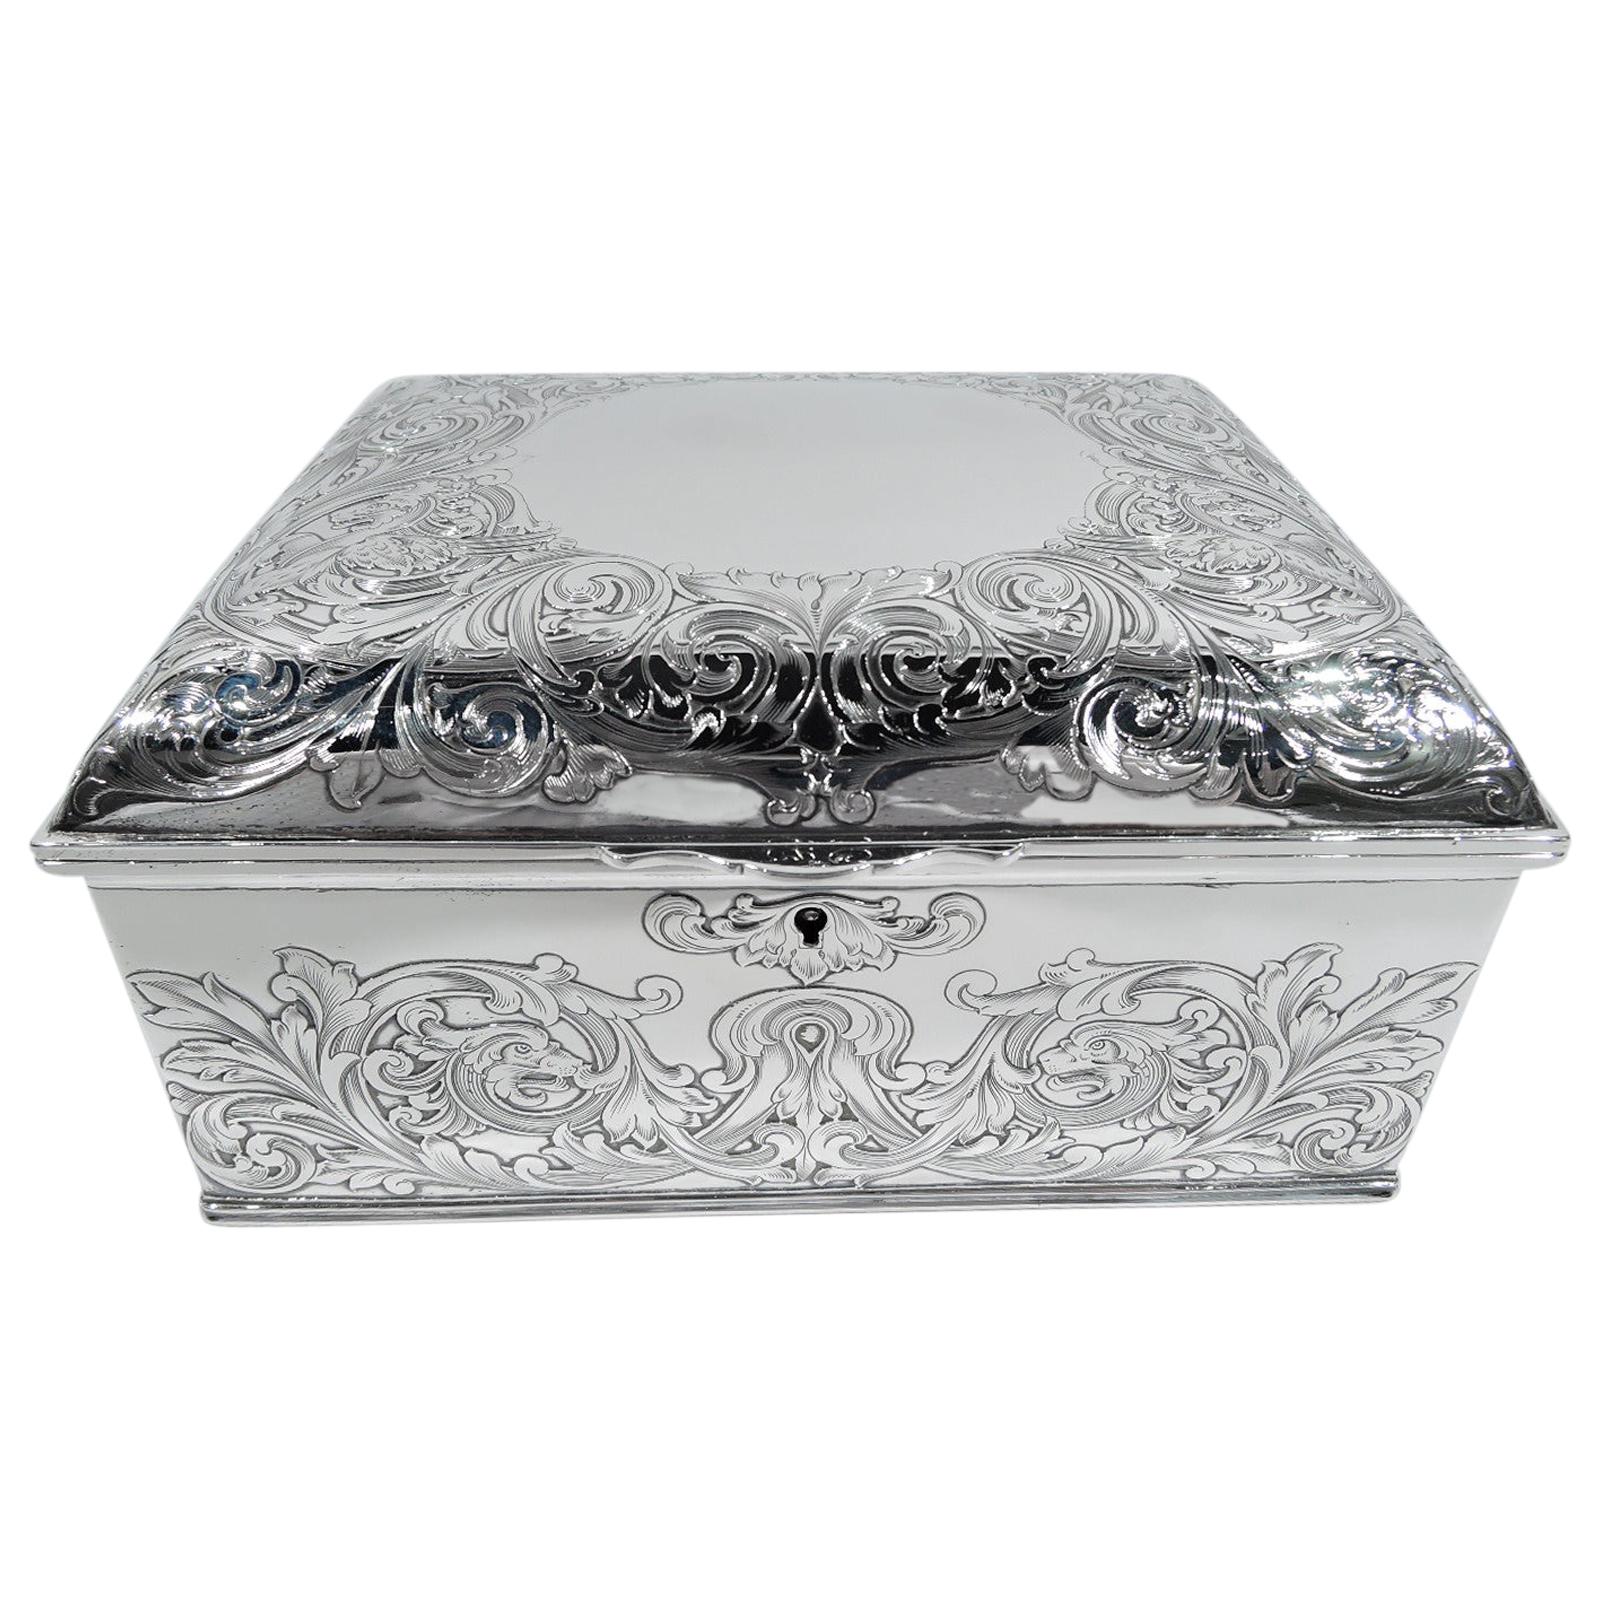 Antique Gorham Art Nouveau Sterling Silver Jewelry Box